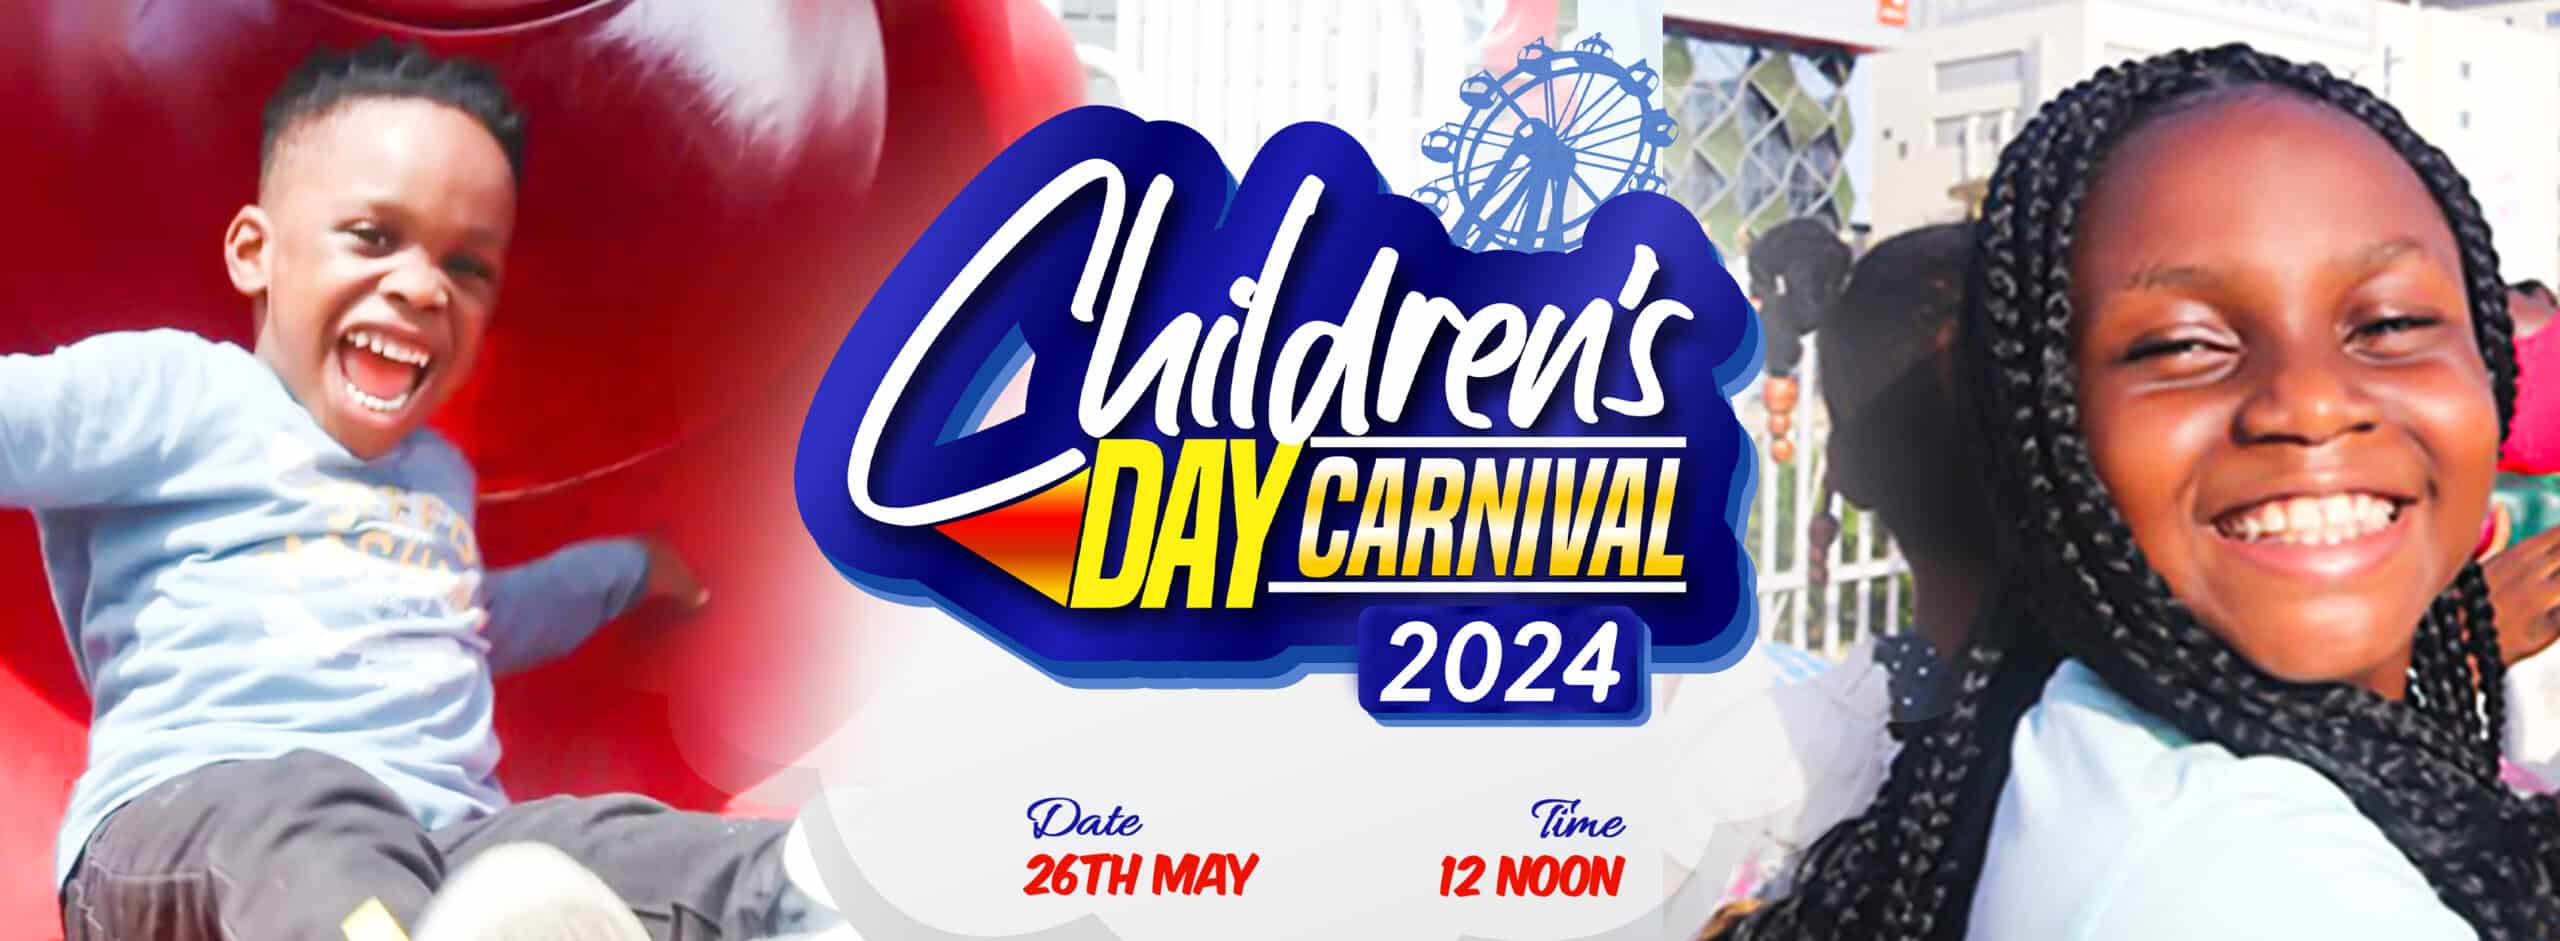 Children’s Day Carnival 2024